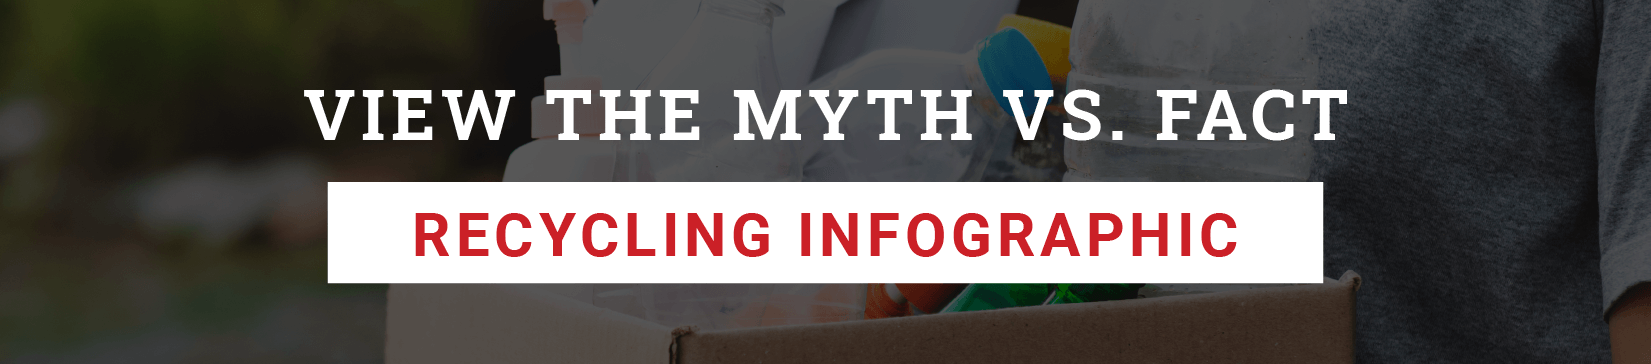 myth vs fact graphic